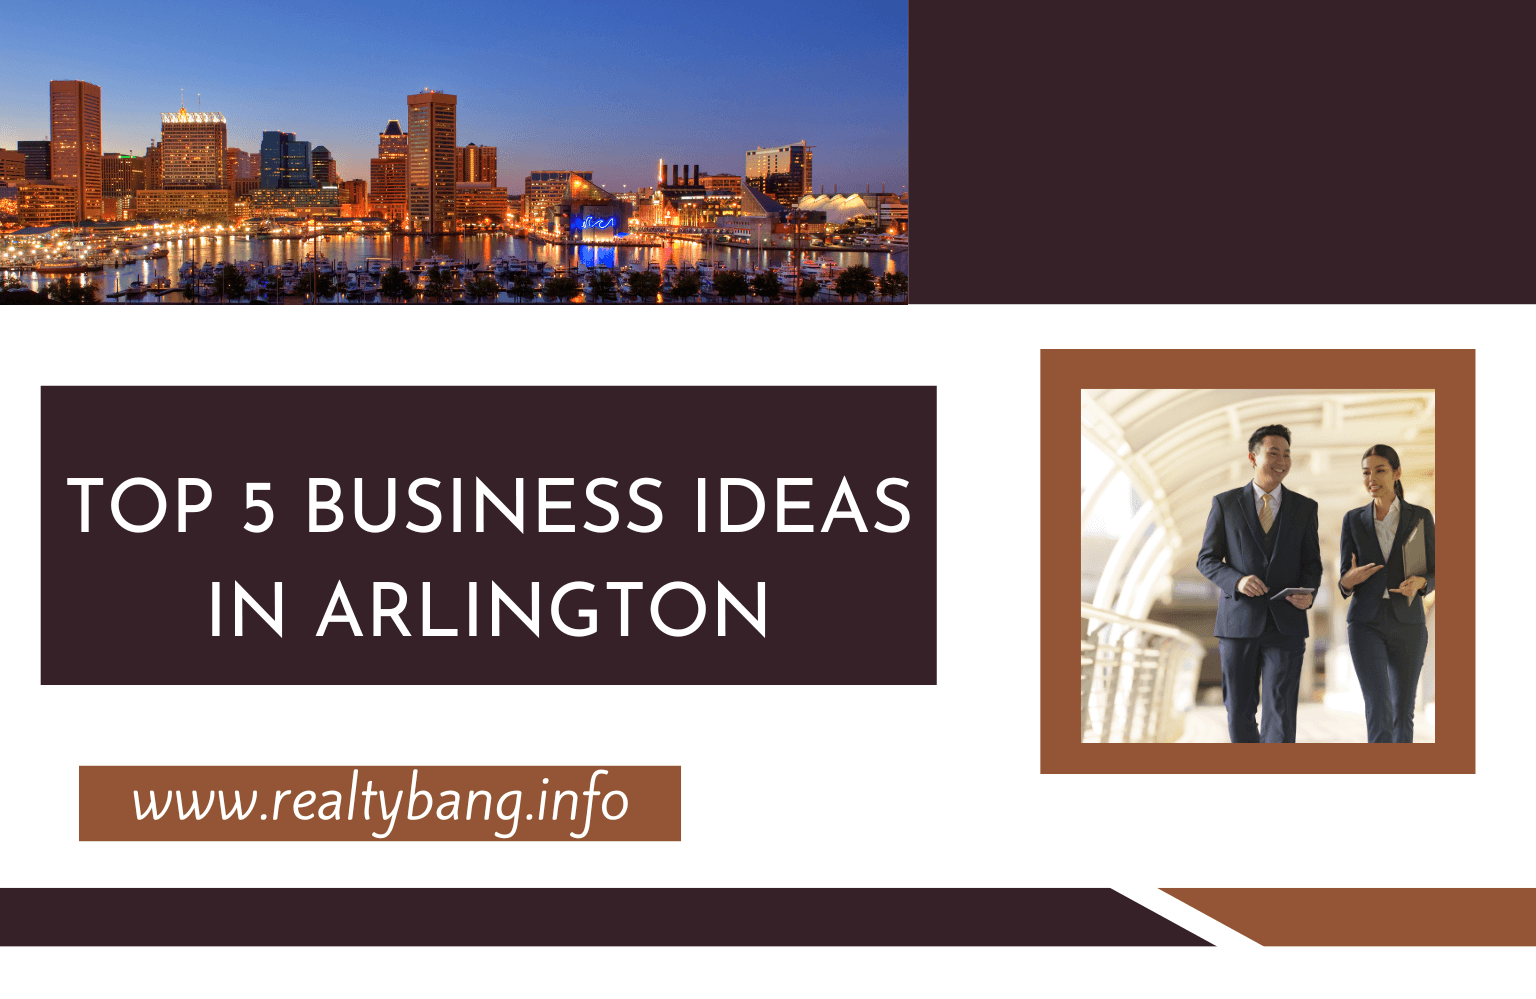 TOP 5 BUSINESS IDEAS IN ARLINGTON